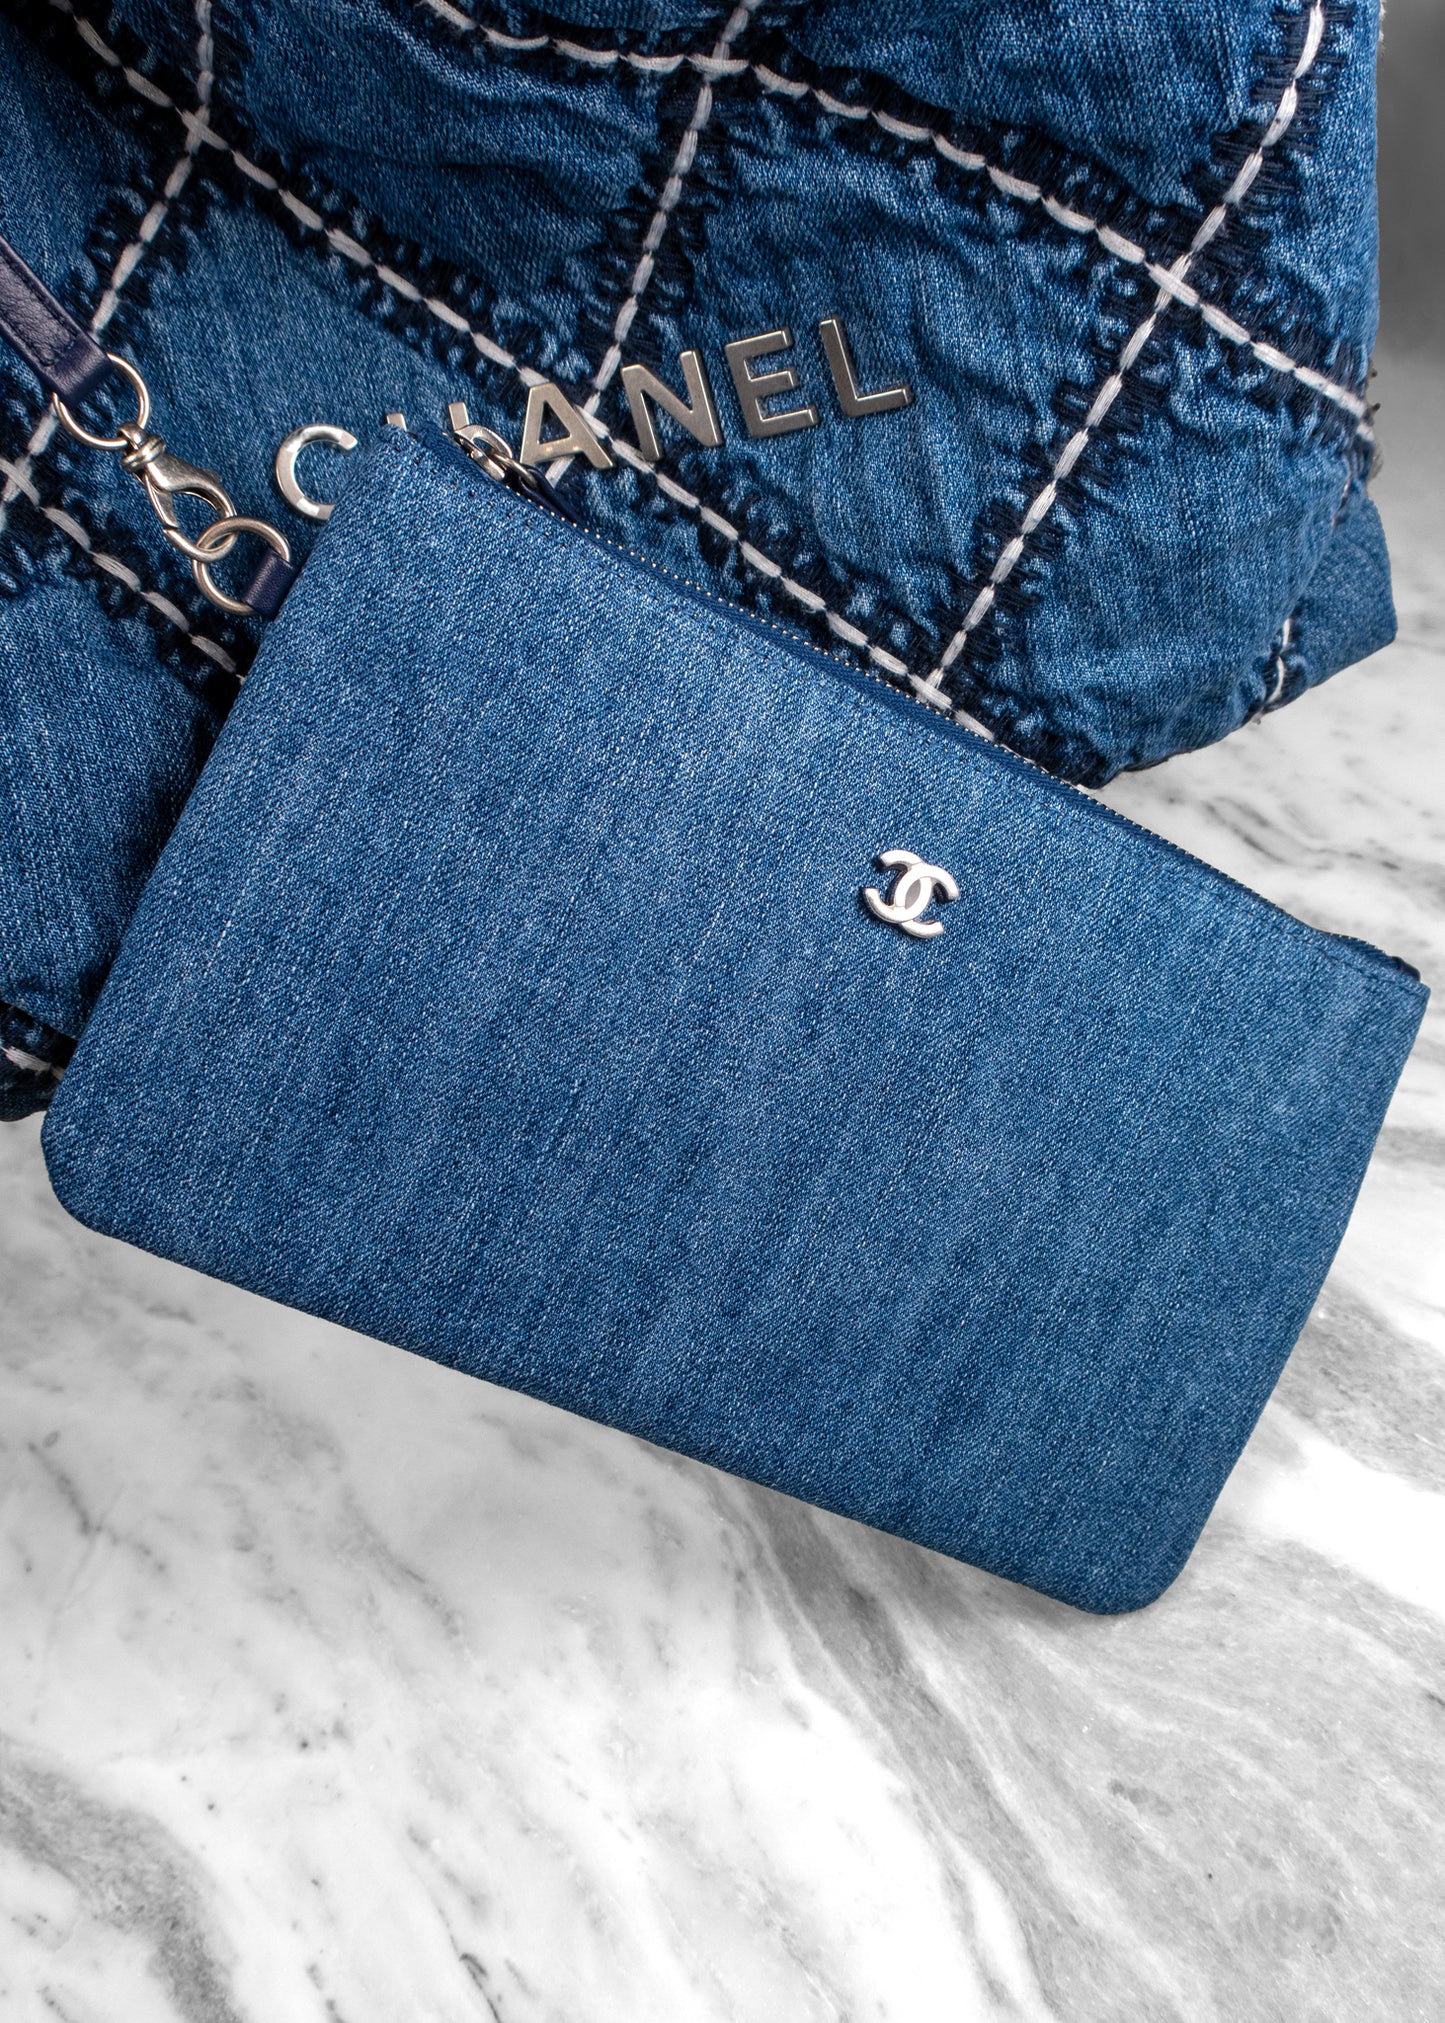 Chanel Stitched Denim Quilted Chanel 22 Blue Handbag